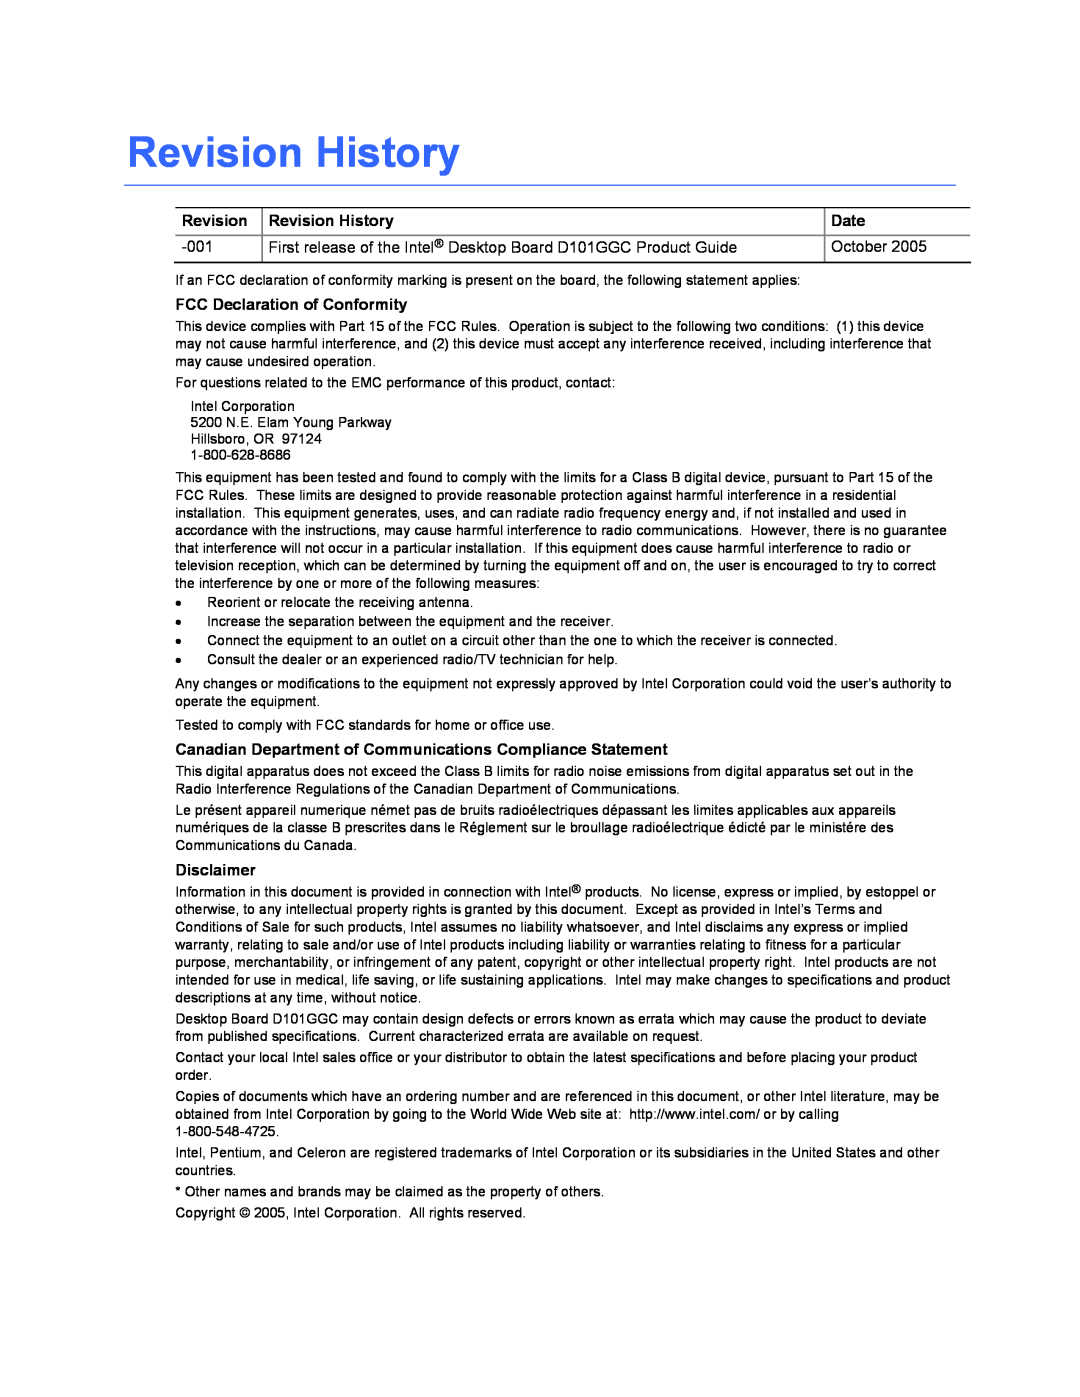 Intel D101GGC manual Revision History, Date, FCC Declaration of Conformity, Disclaimer 